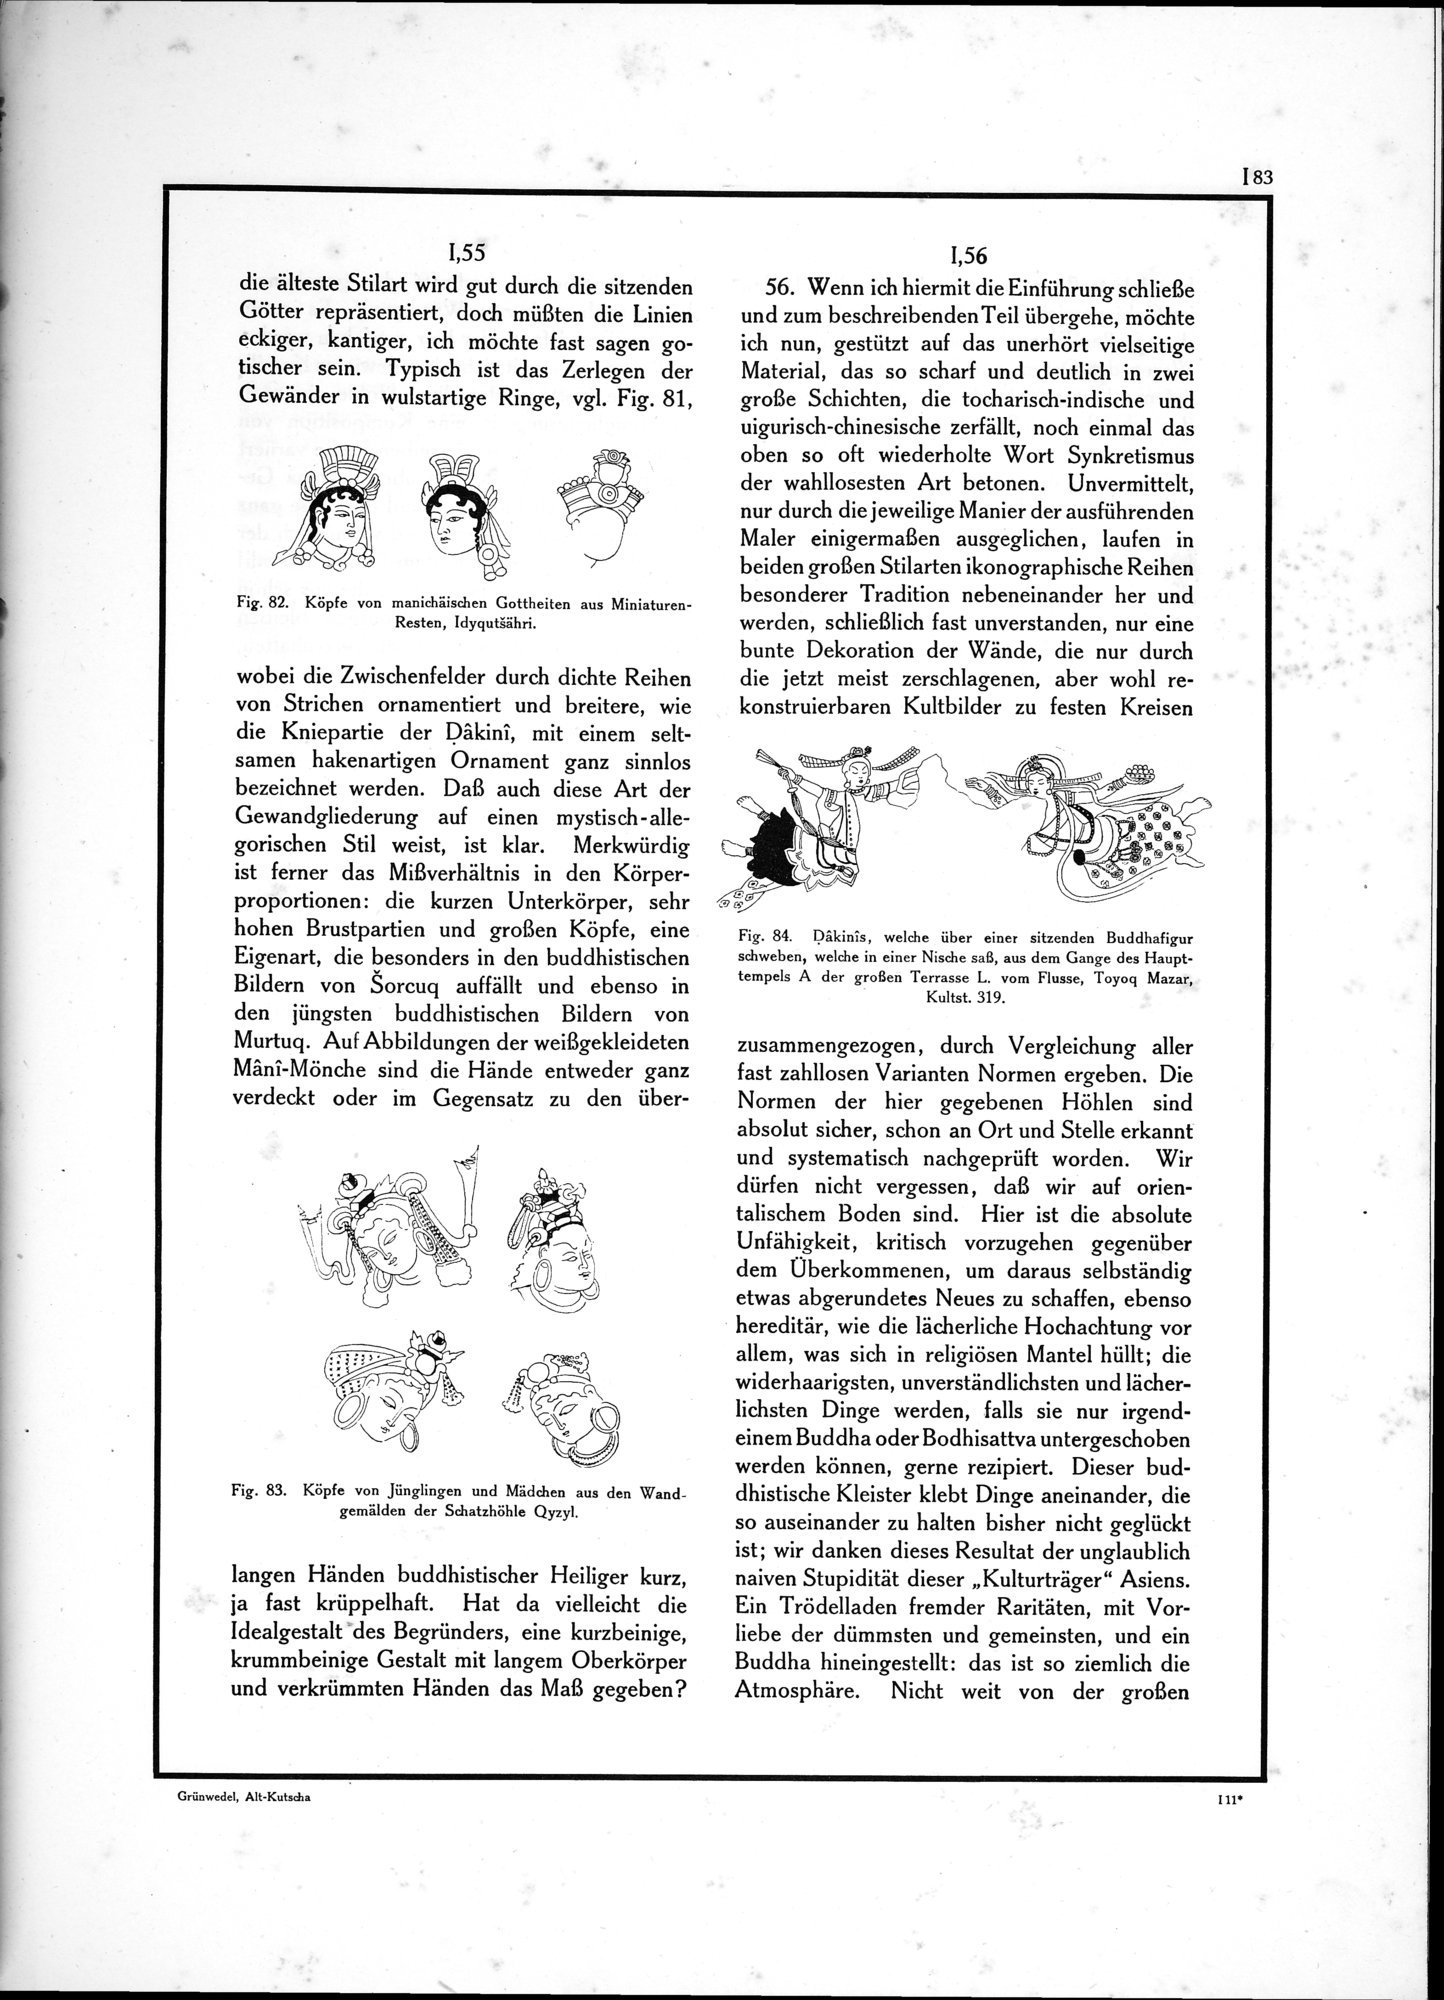 Alt-Kutscha : vol.1 / Page 95 (Grayscale High Resolution Image)